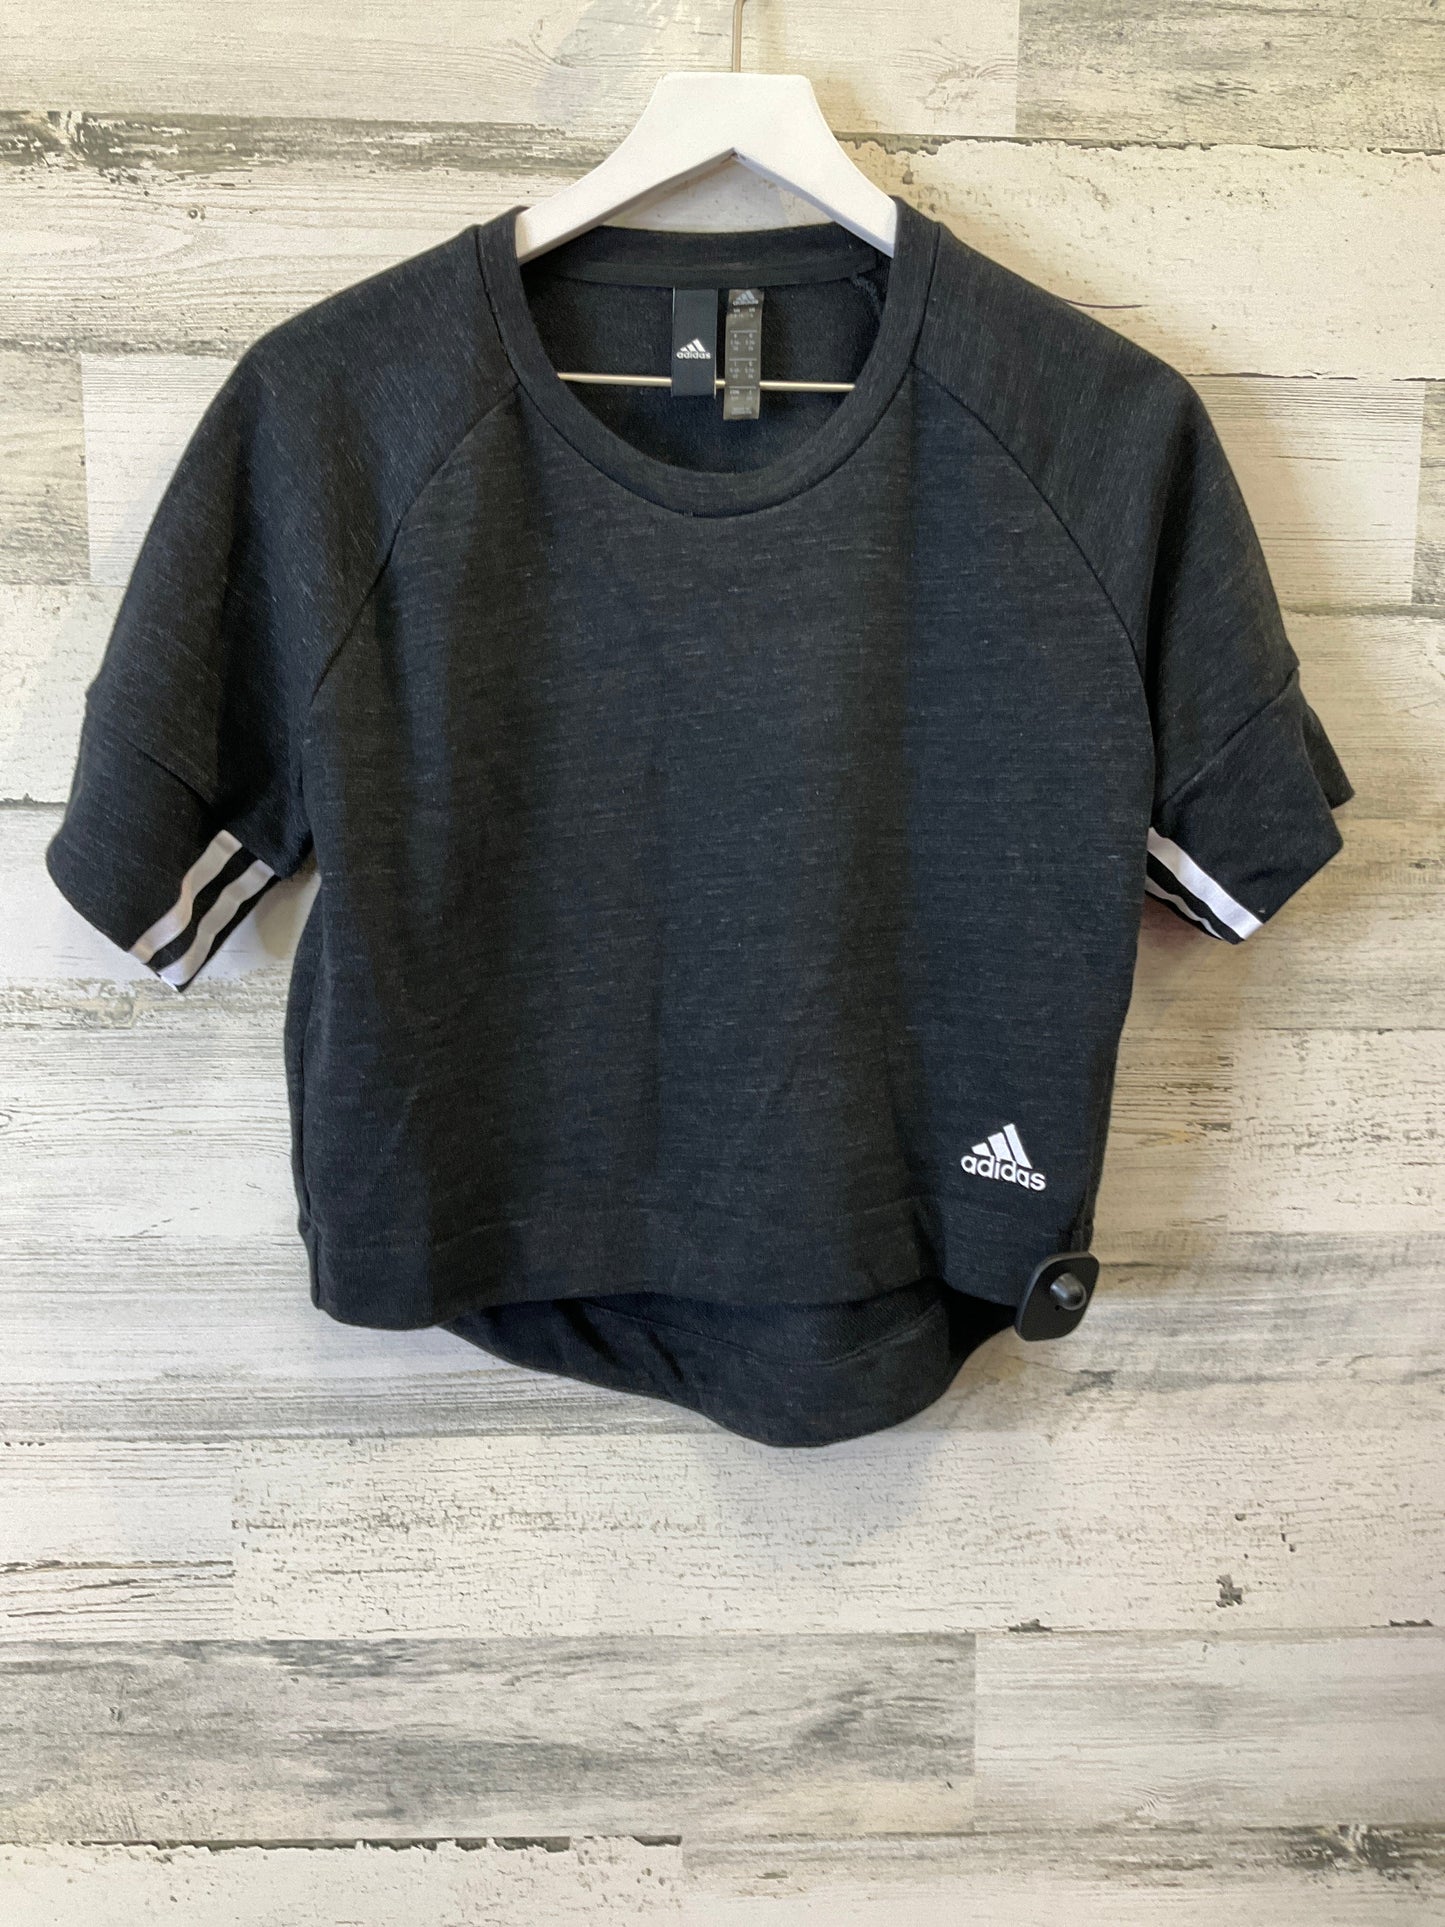 Black Athletic Top Short Sleeve Adidas, Size S